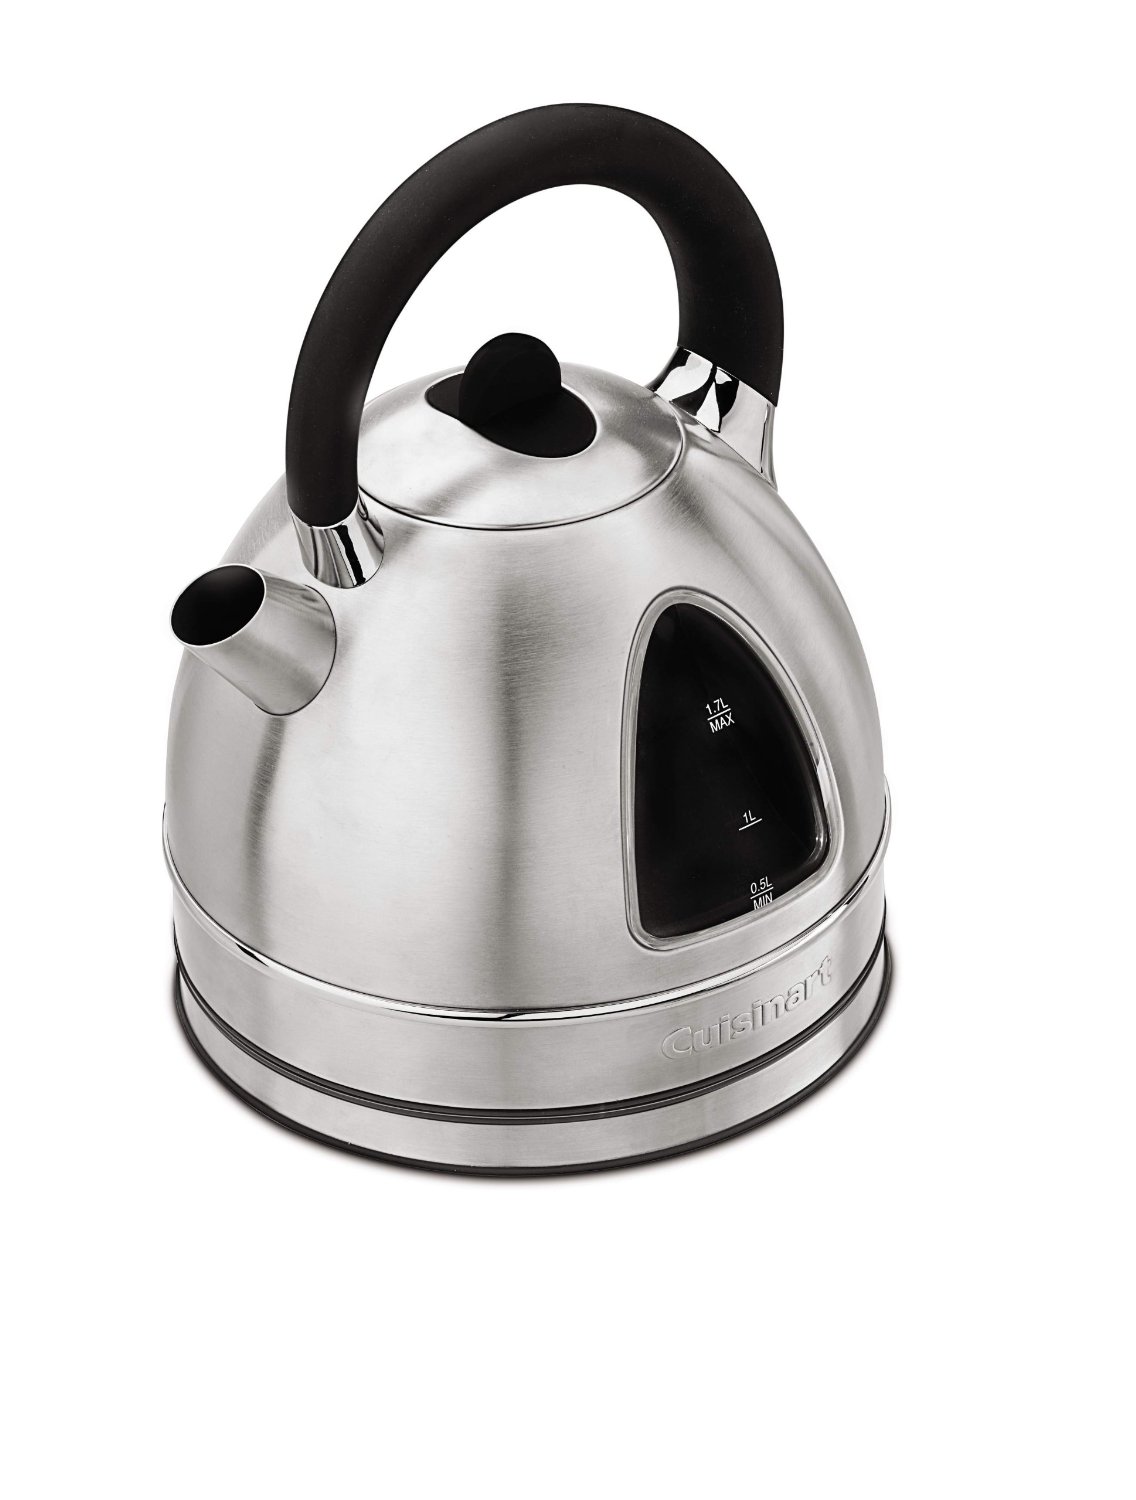 Cuisinart Cordless Electric kettle. Salem чайник. Kettle Cuisinart cjk780e .body frame Type: Stainless Steel capacity: 1. Чайник переходный возраст